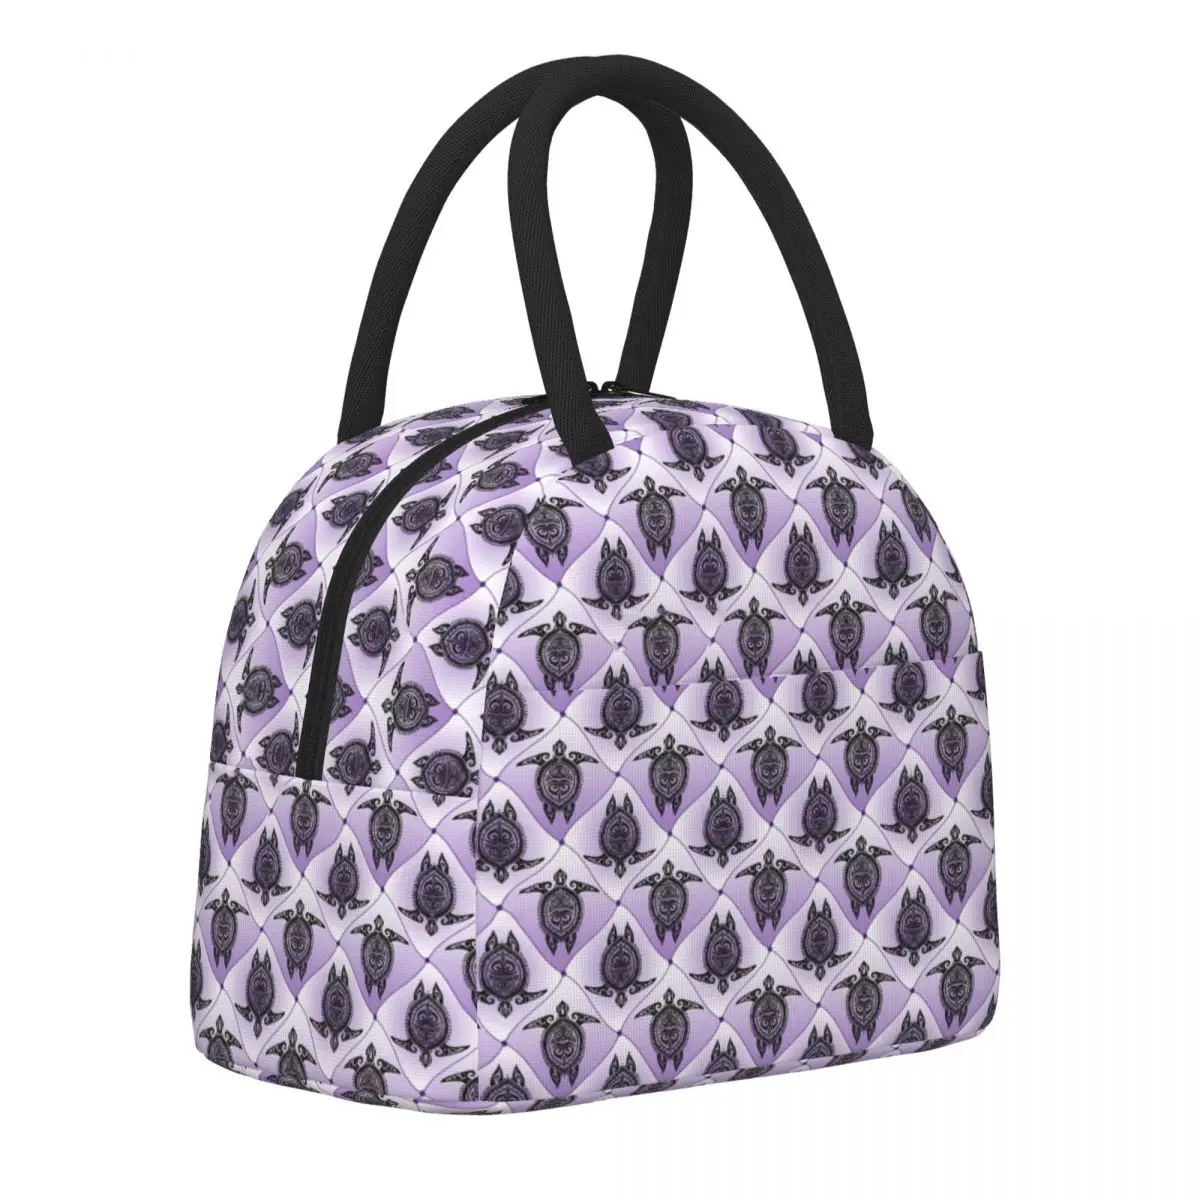 

Sea Turtles Lunch Bag Cute Animal Convenient Lunch Box Travel Print Cooler Bag Cute Oxford Thermal Tote Handbags